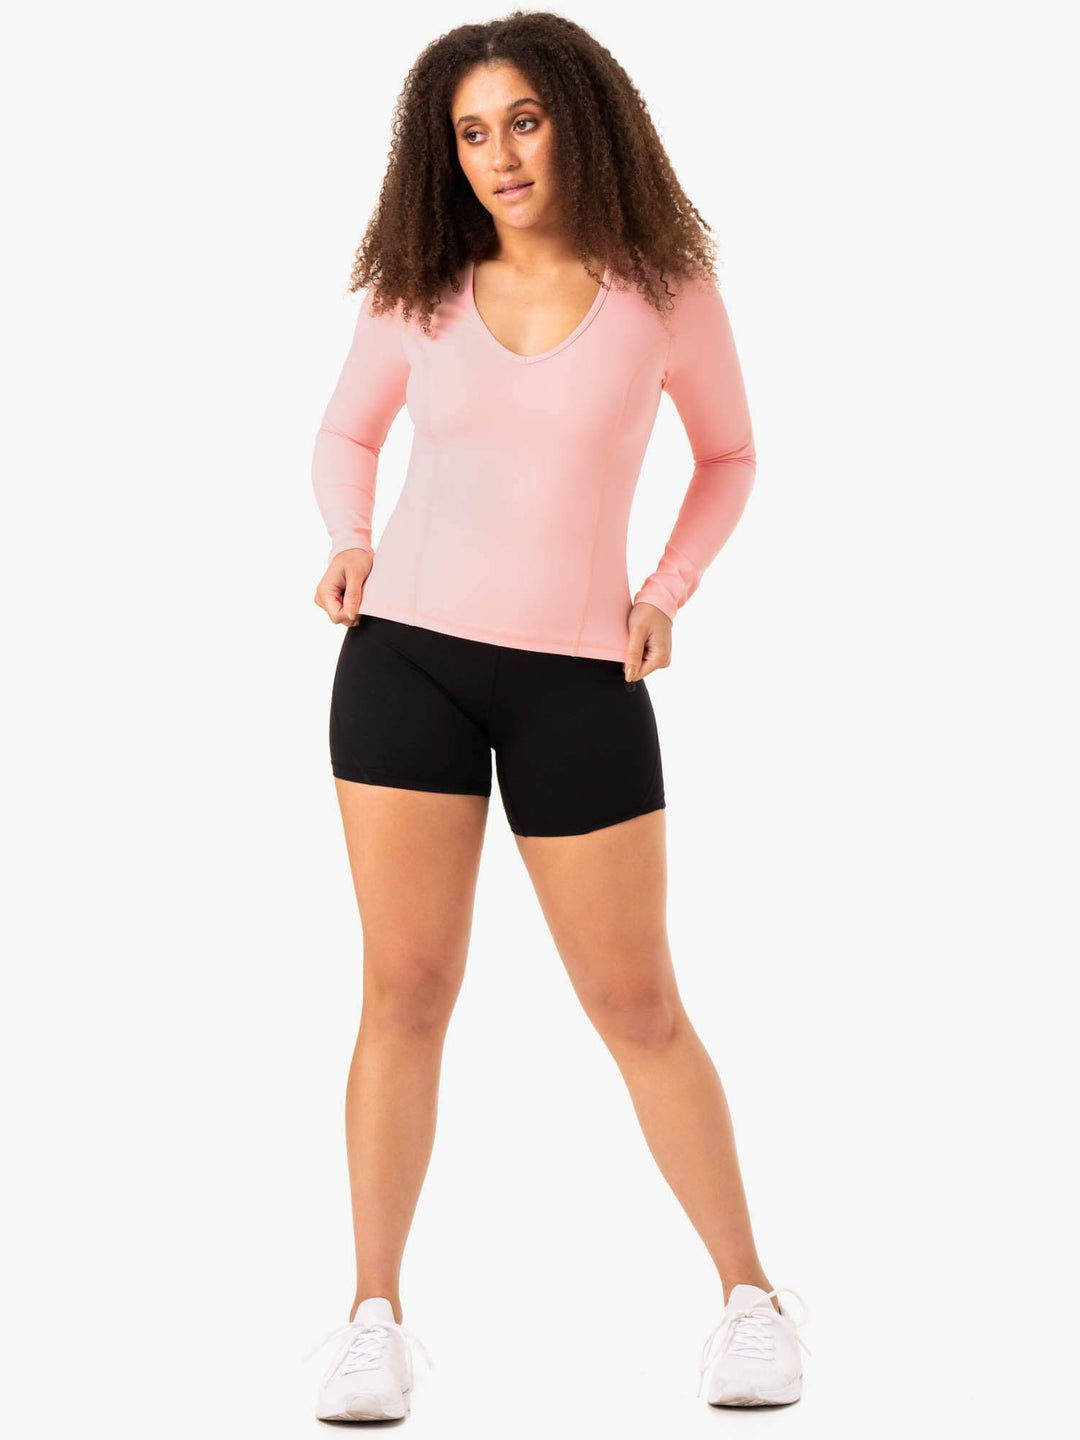 NKD Align Long Sleeve Training Top - Pink Clothing Ryderwear 